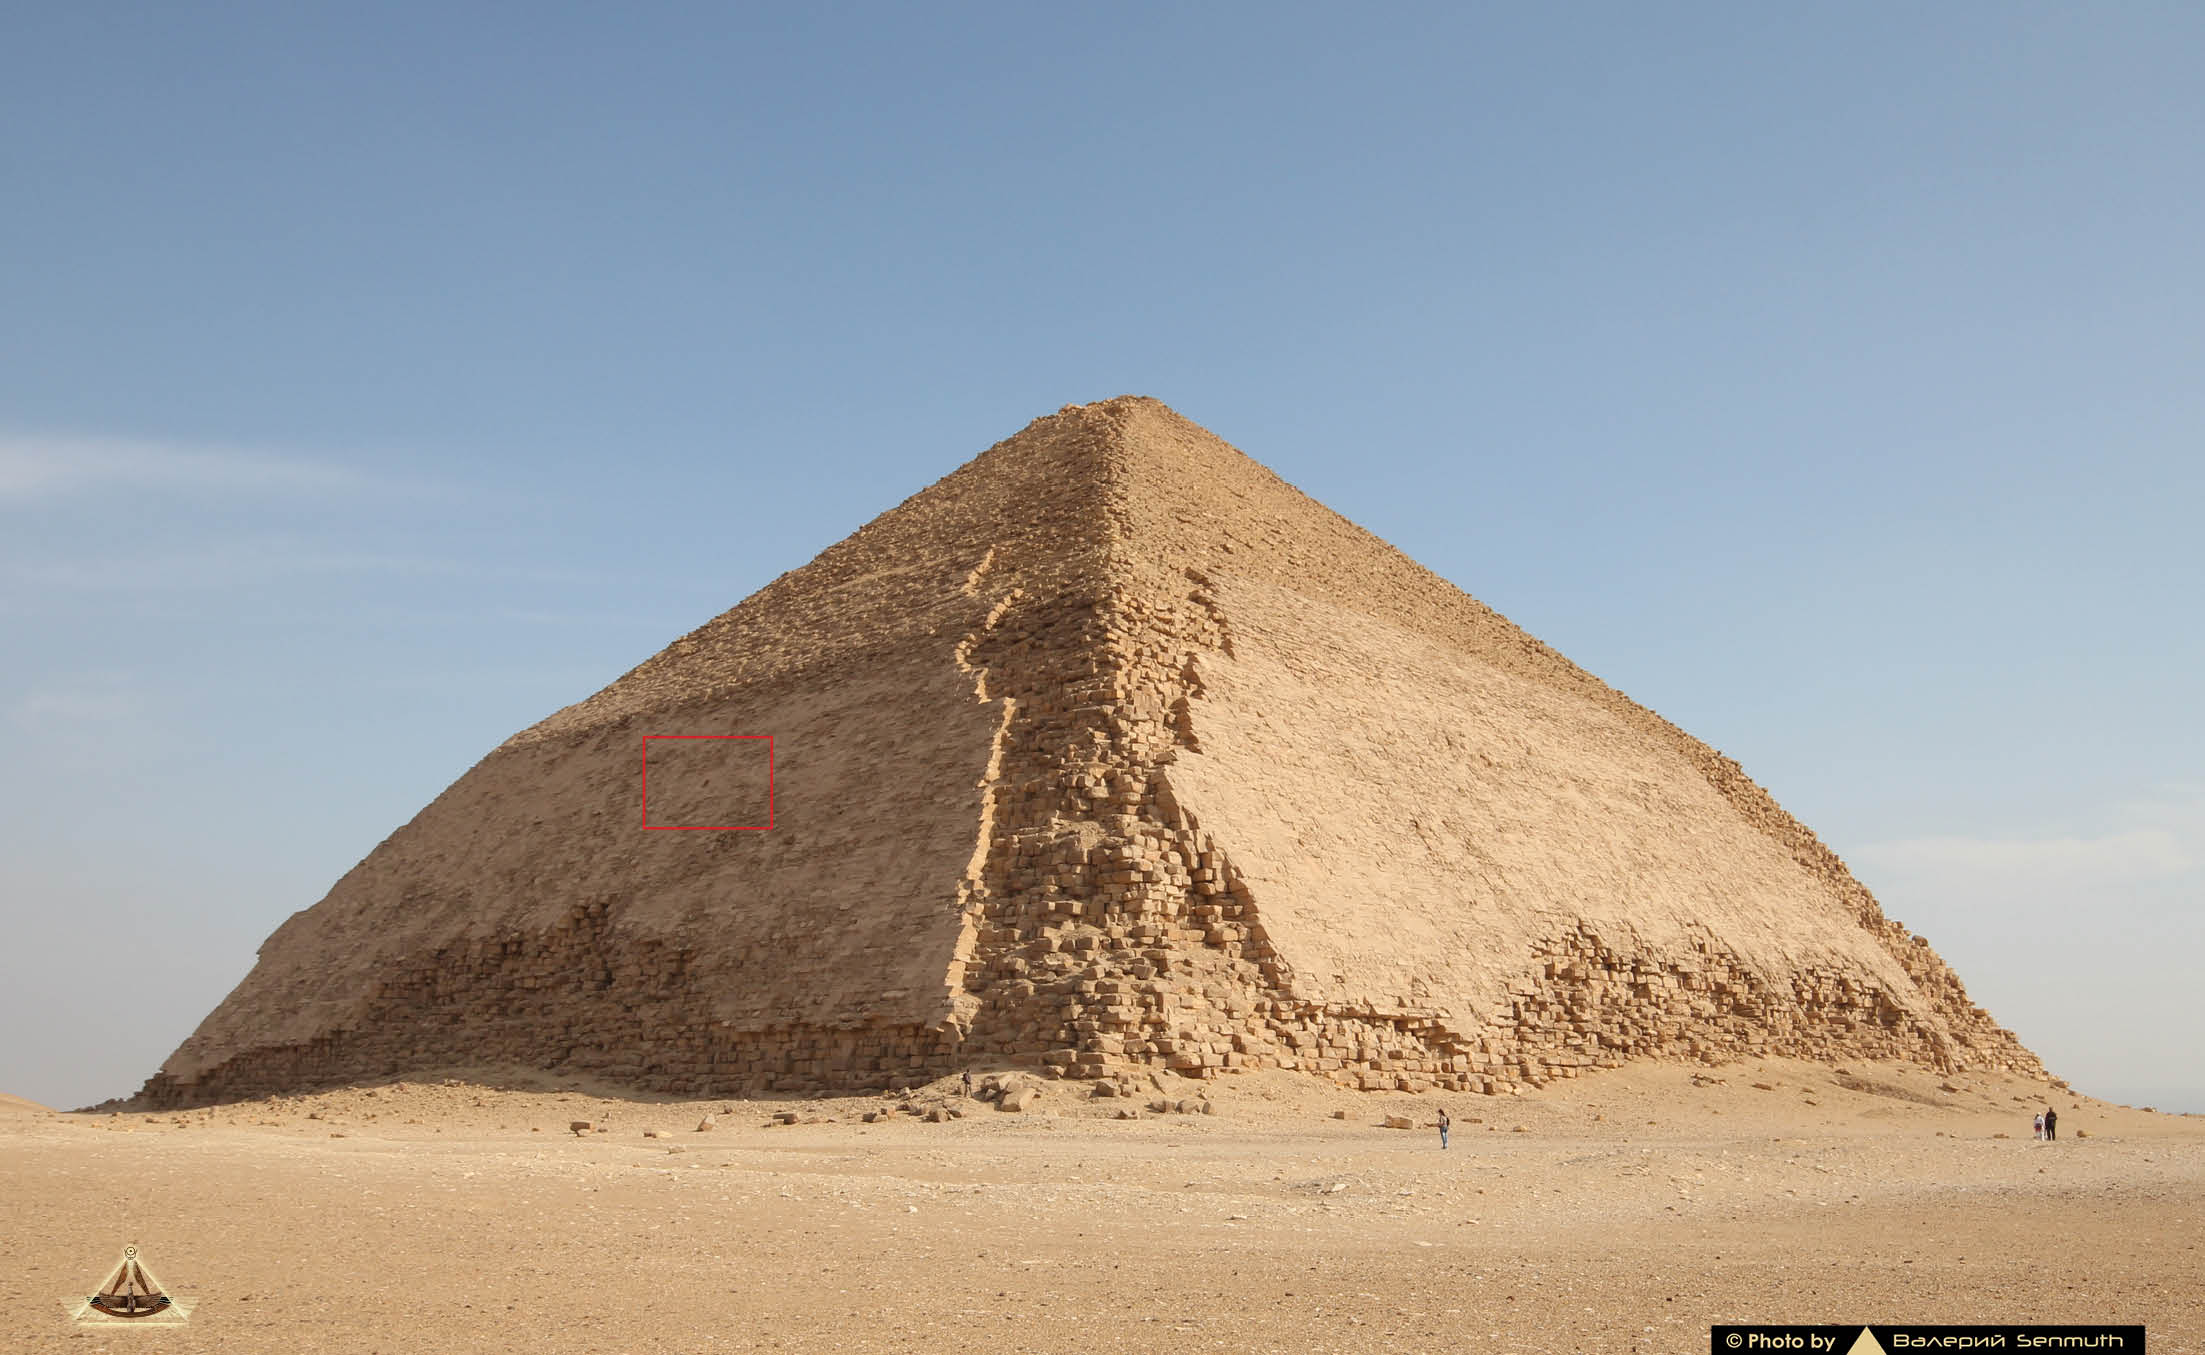 Пирамида снофру имеет 220 104 11. Пирамида Снофру. Южная пирамида Дахшурского некрополя. Пирамида Снофру в Дахшуре. Ломаная пирамида фараона Снофру.